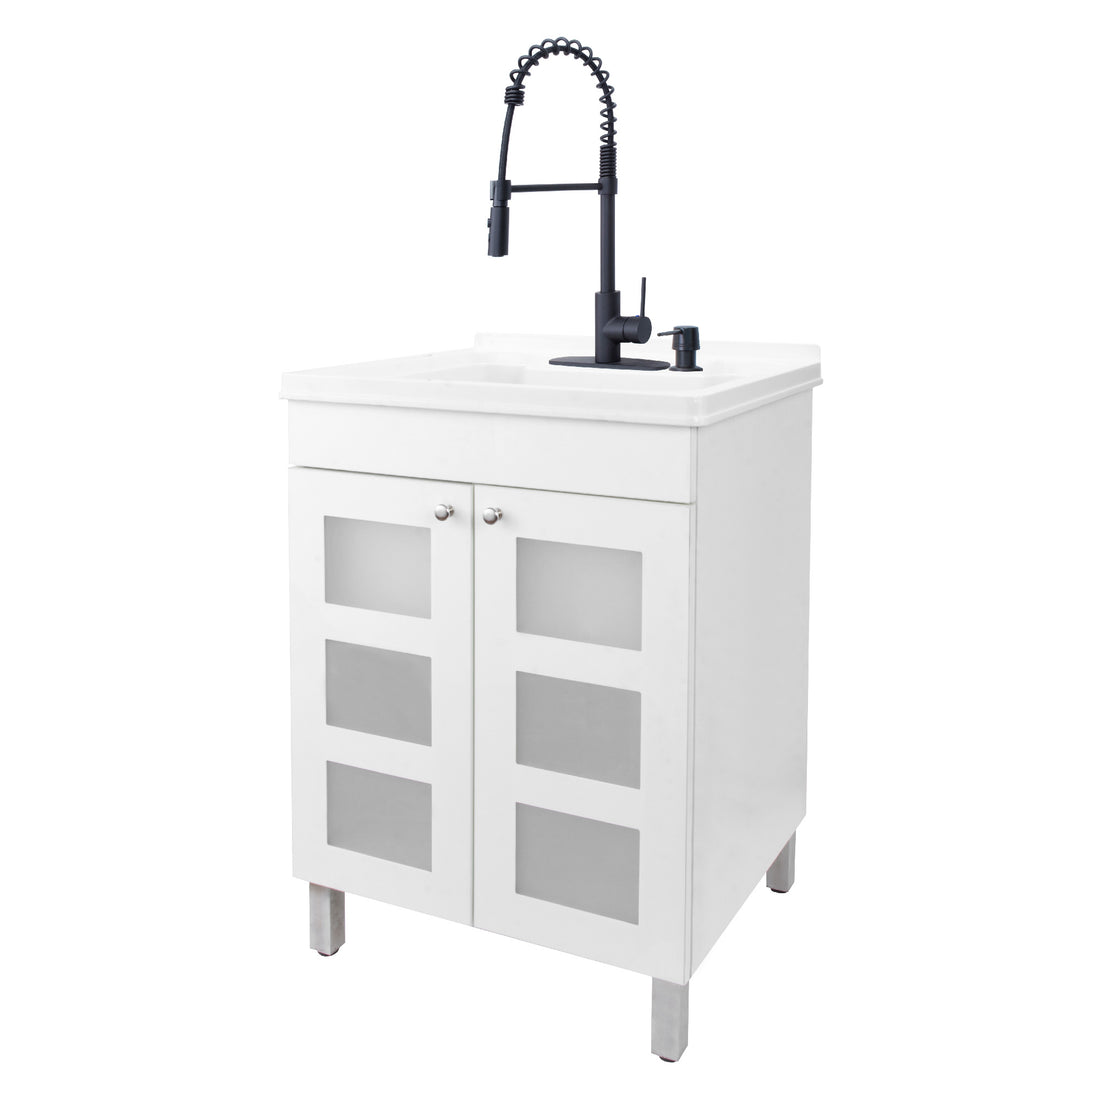 Tehila White Vanity Cabinet and White Utility Sink with Black Finish High-Arc Coil Pull-Down Faucet - Utility sinks vanites Tehila